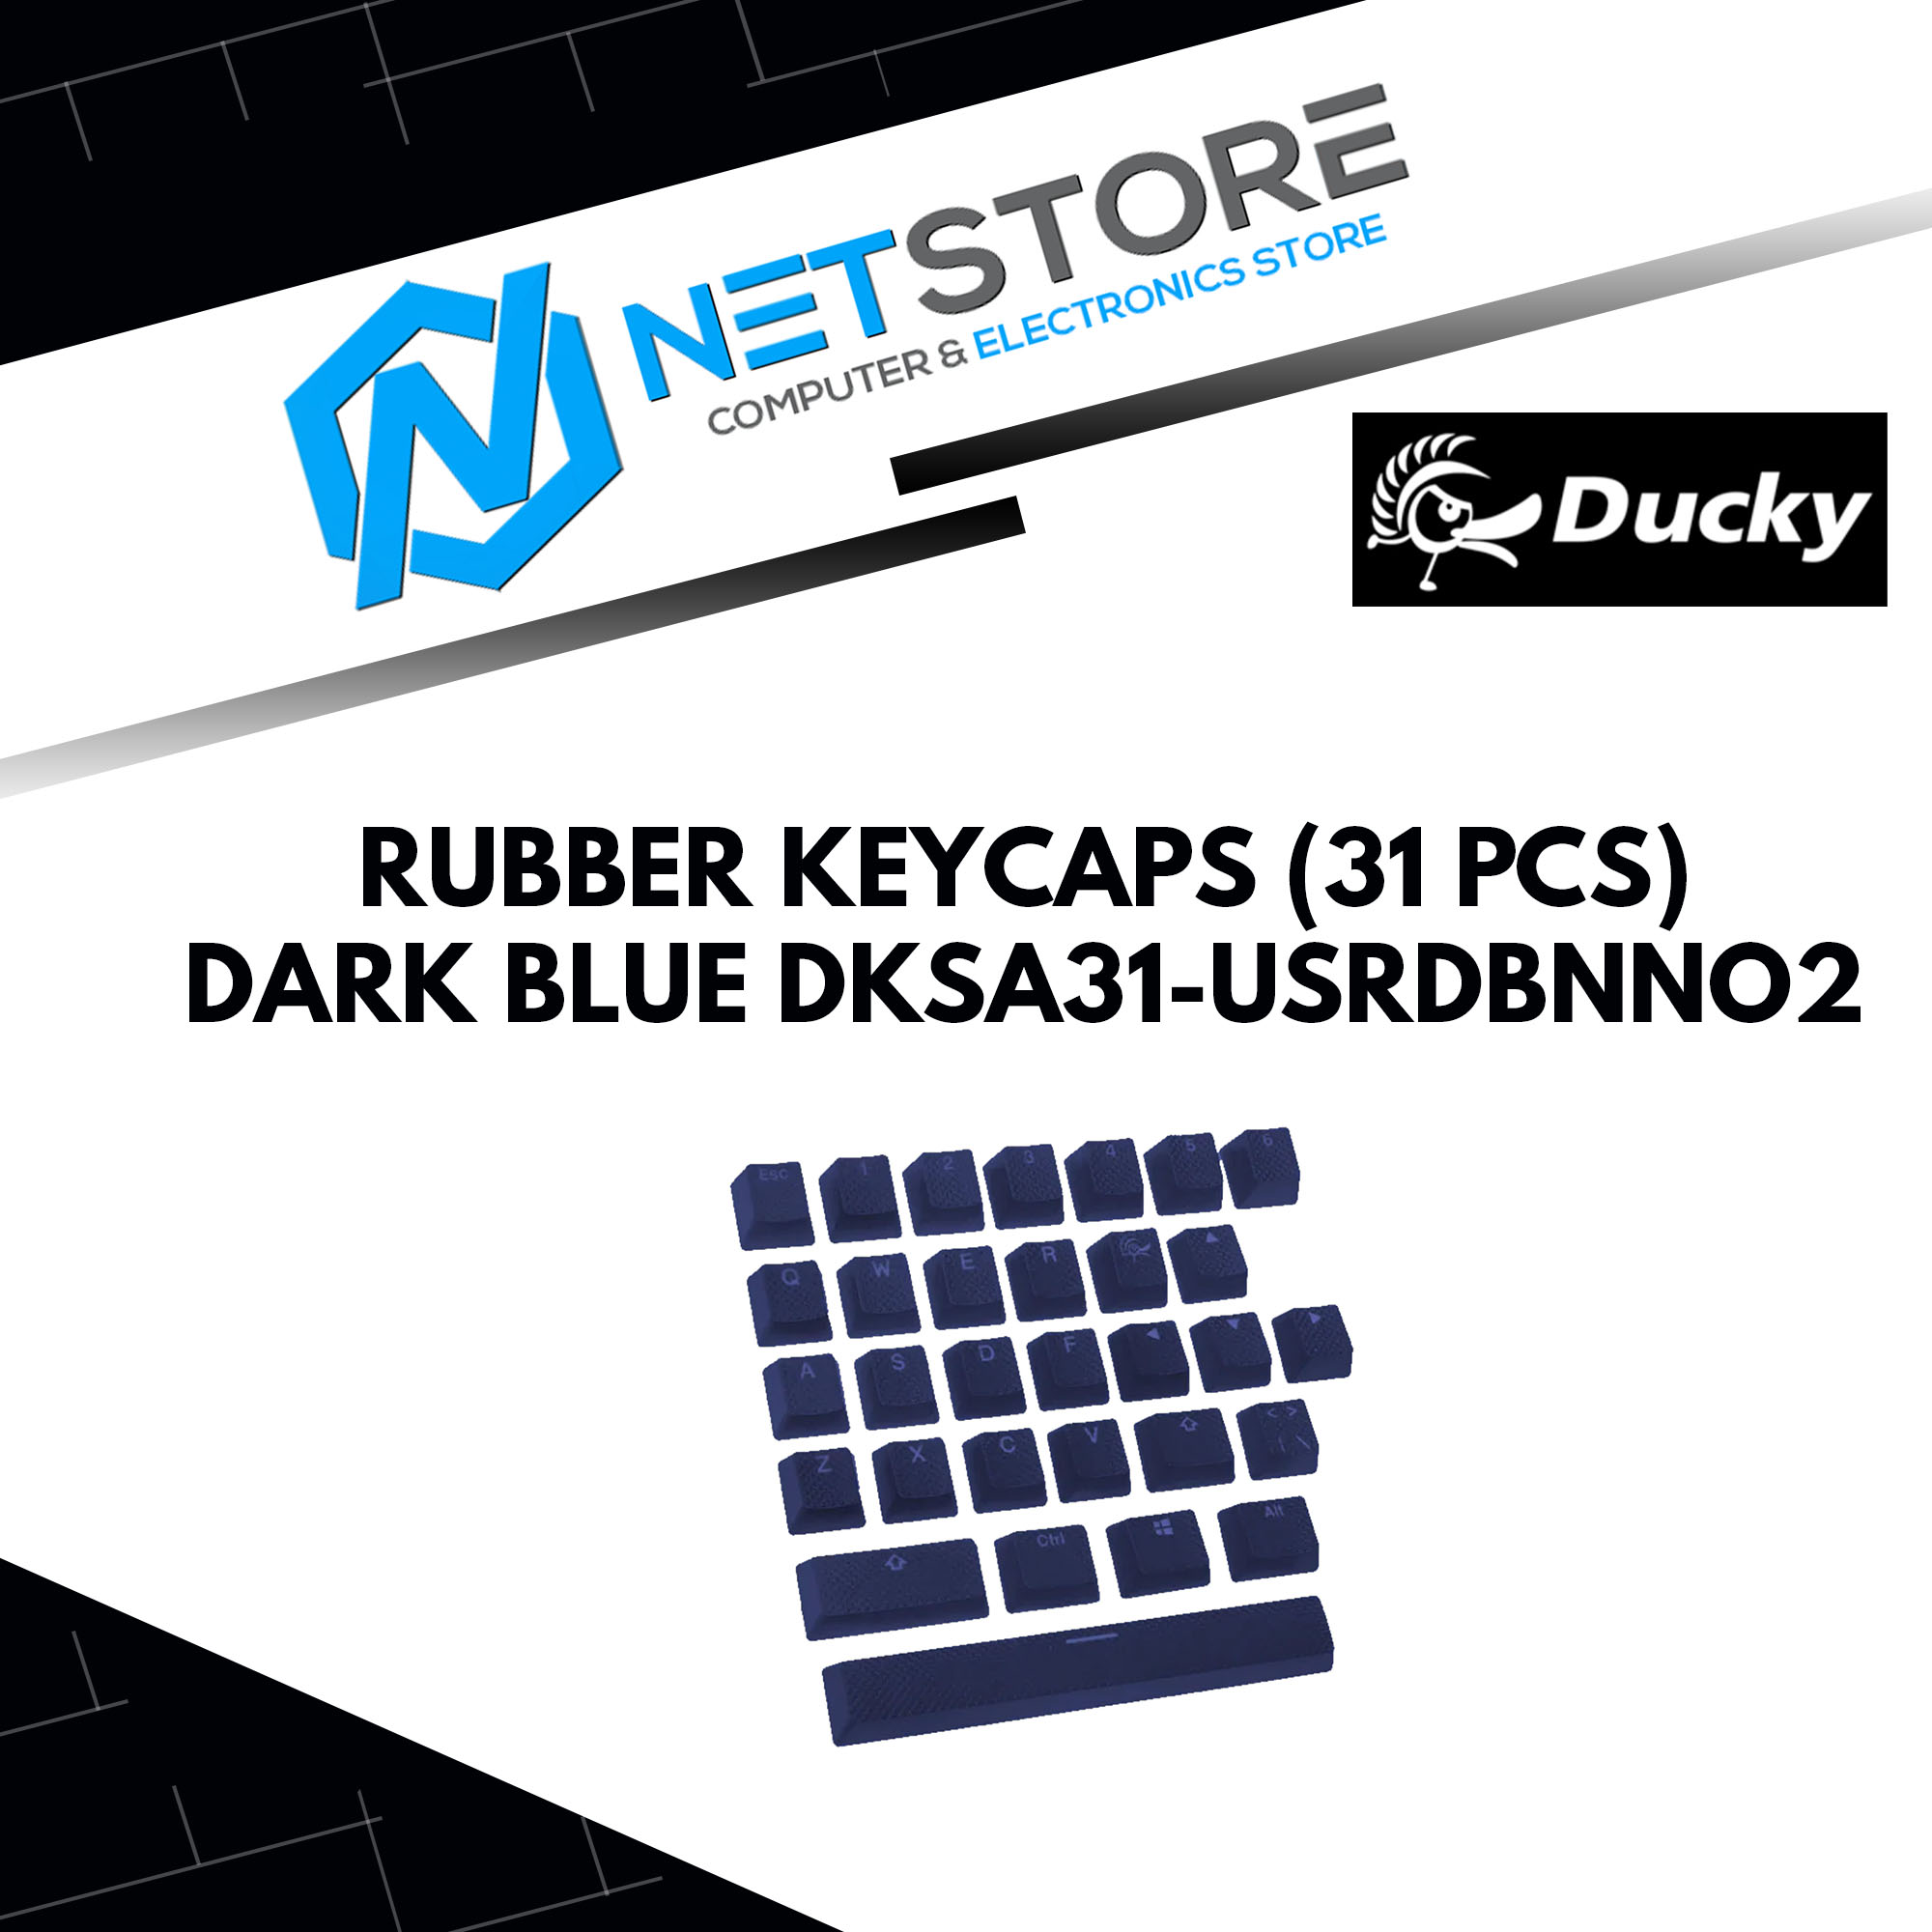 DUCKY RUBBER KEYCAPS (31 PCS) - DARK BLUE DKSA31-USRDBNNO2